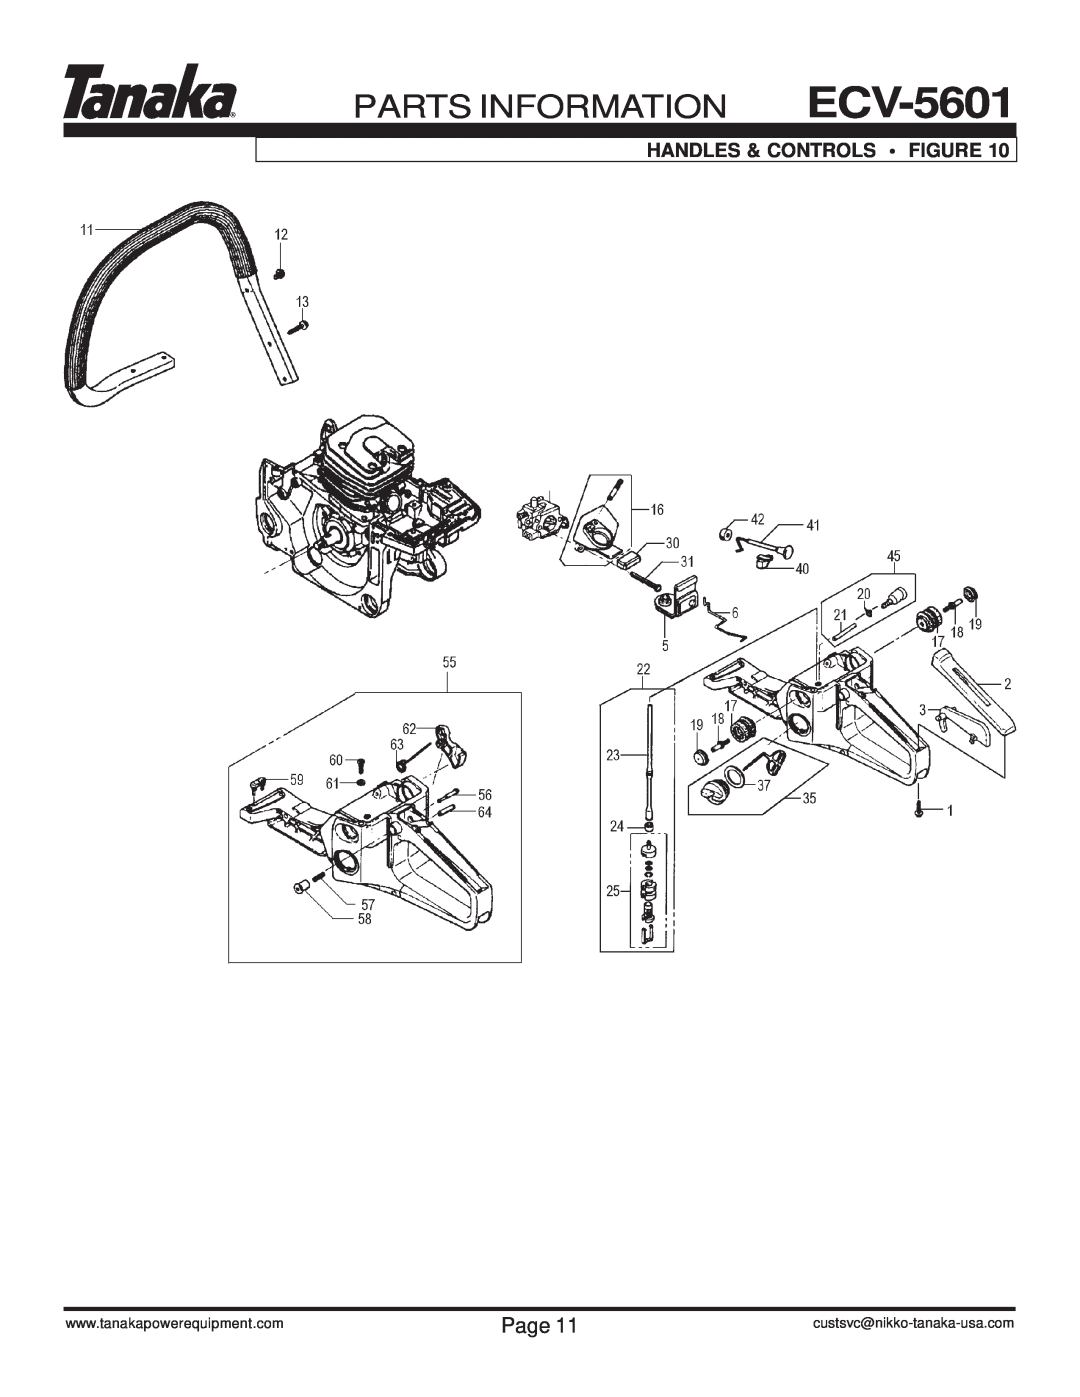 Tanaka manual Handles & Controls Figure, PARTS INFORMATION ECV-5601, Page, custsvc@nikko-tanaka-usa.com 